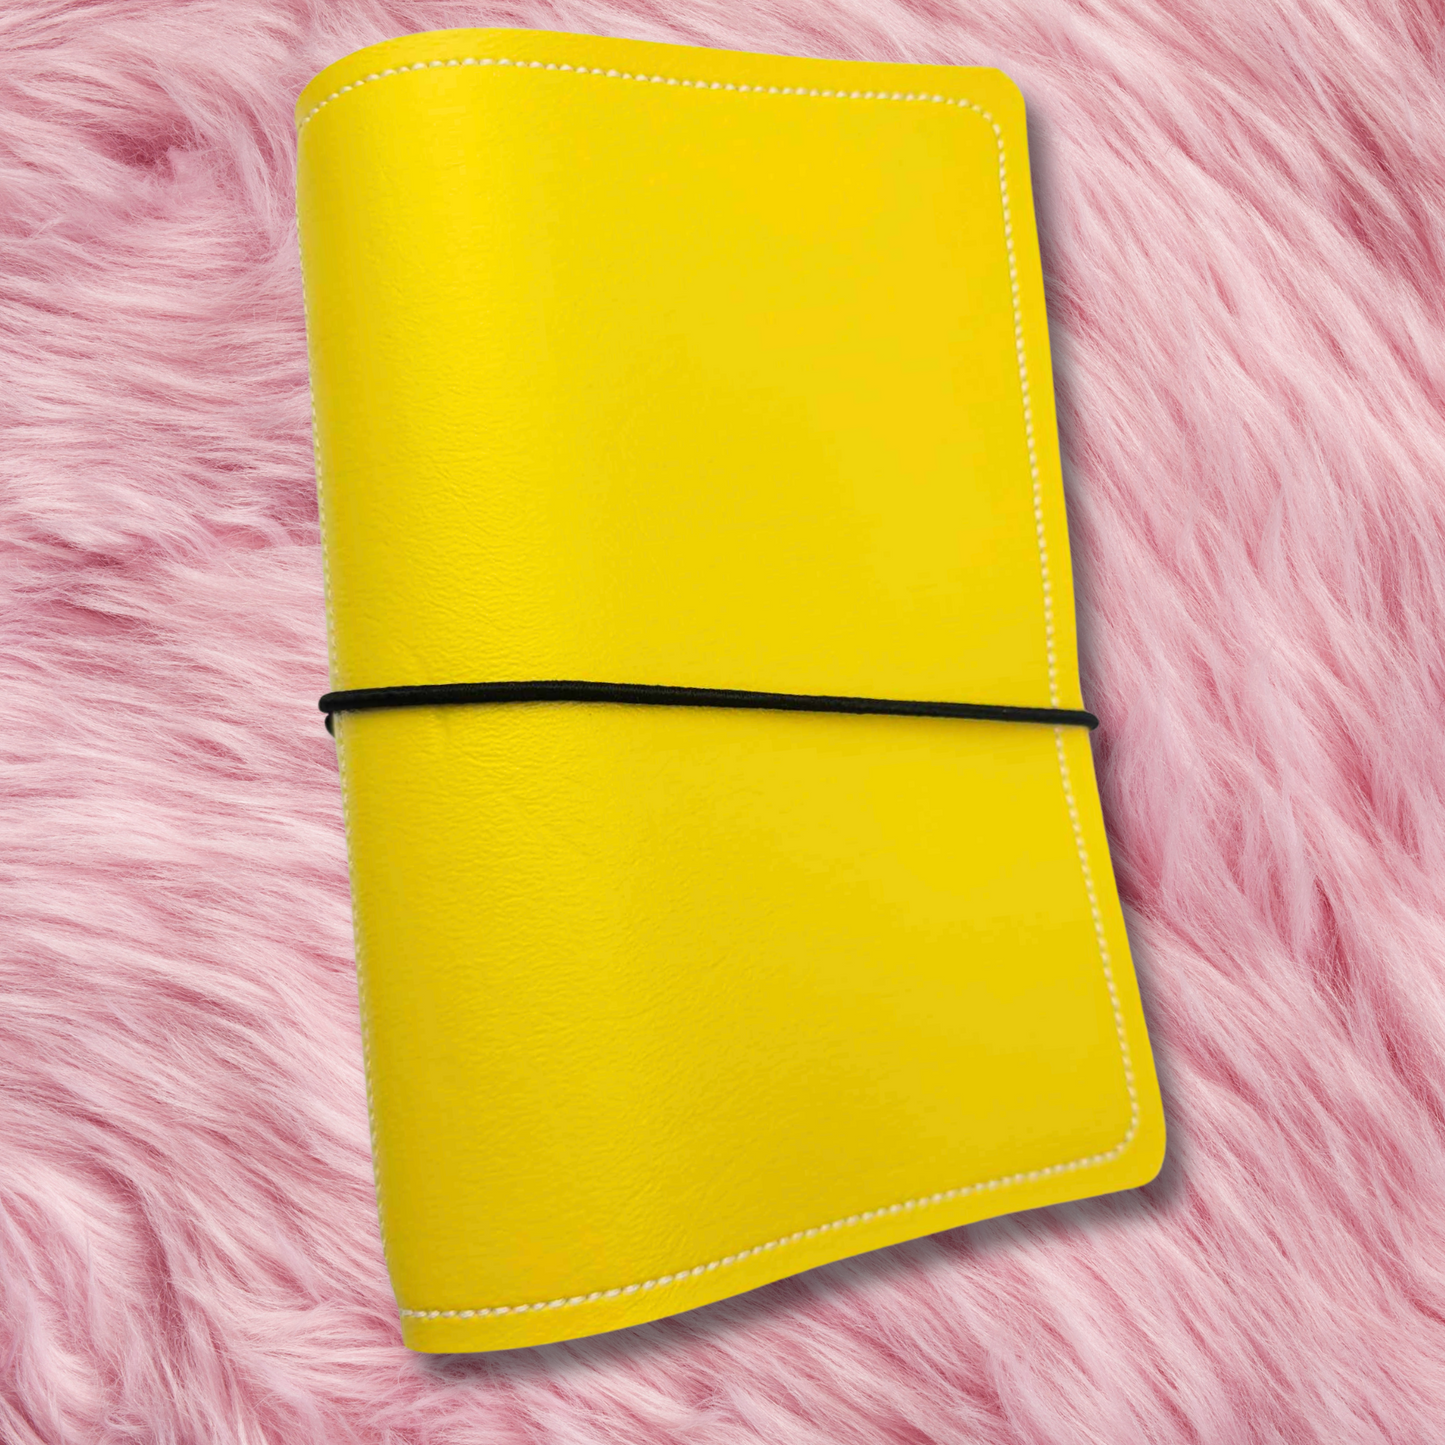 A6 Sized Handmade Traveler's Notebook - Yellow w/ Black Strings